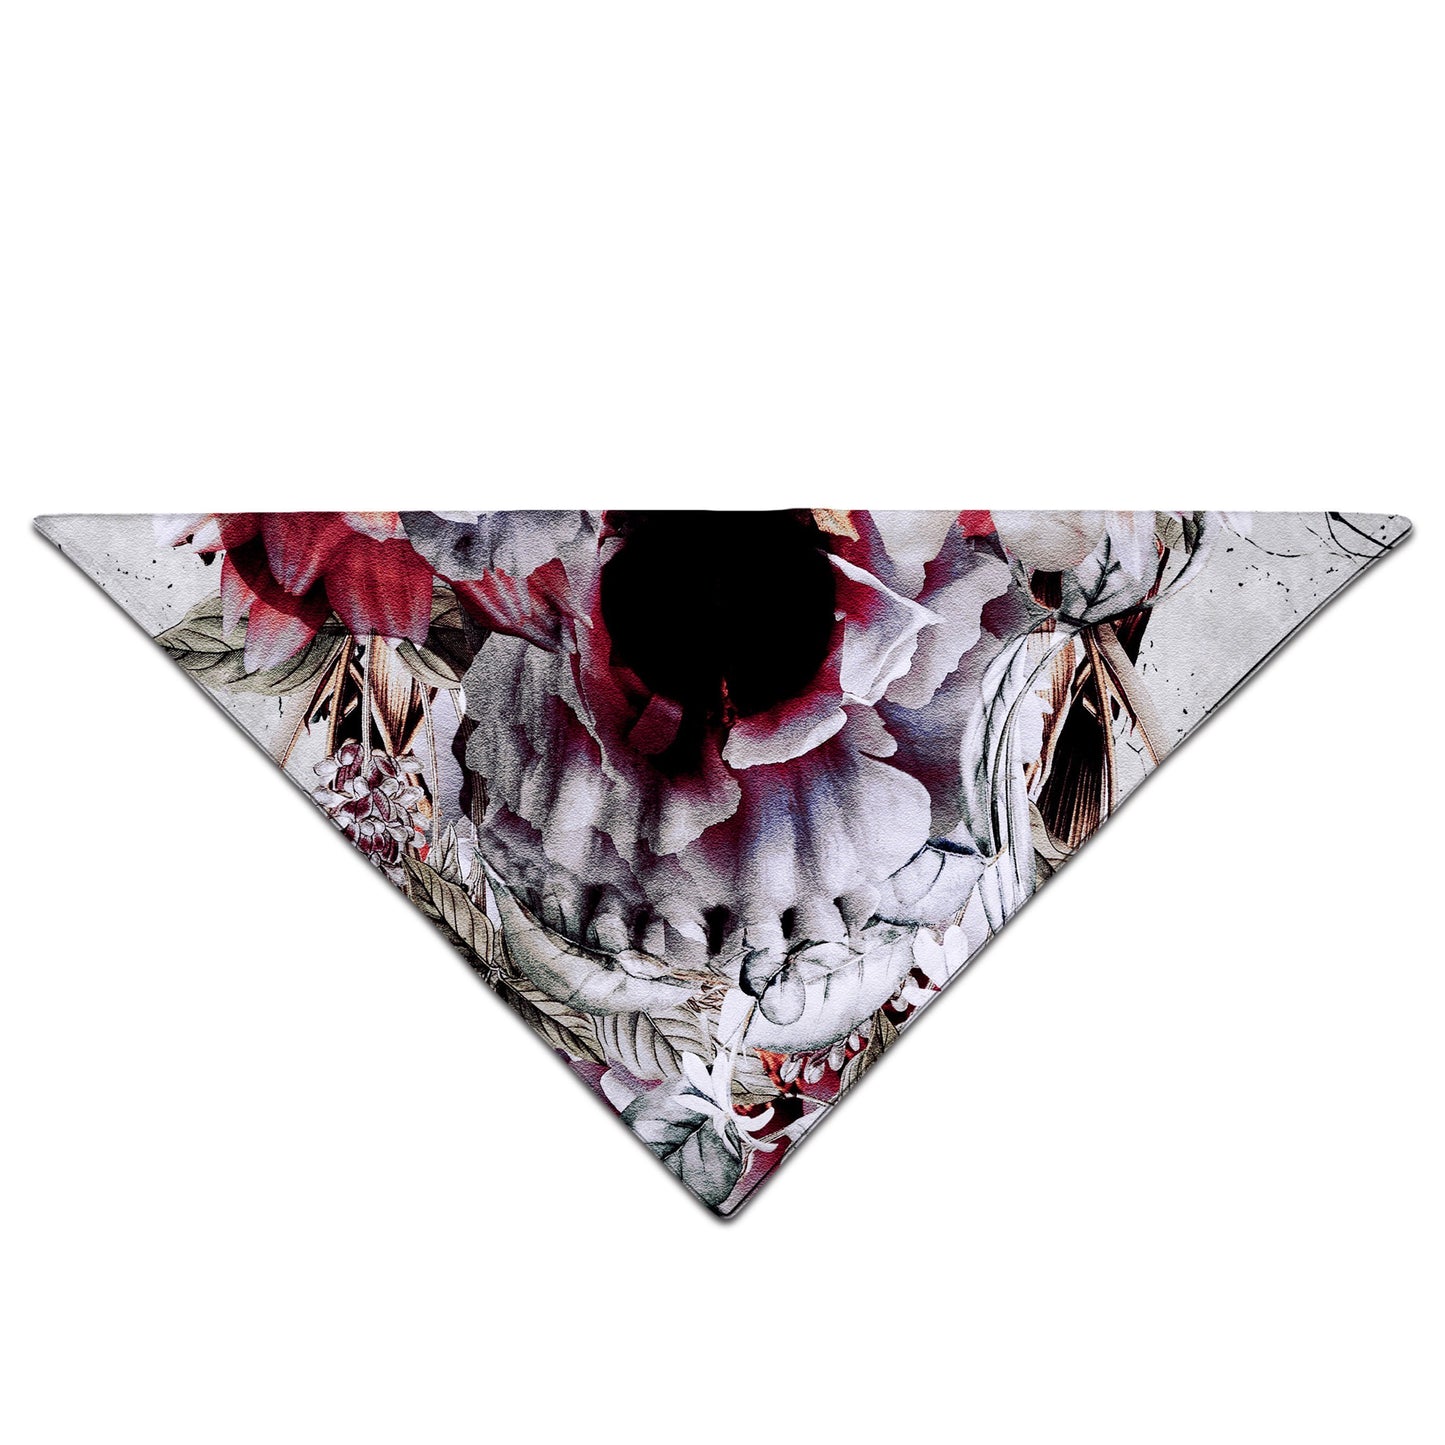 Riza Peker Floral Skull Bandana - iEDM